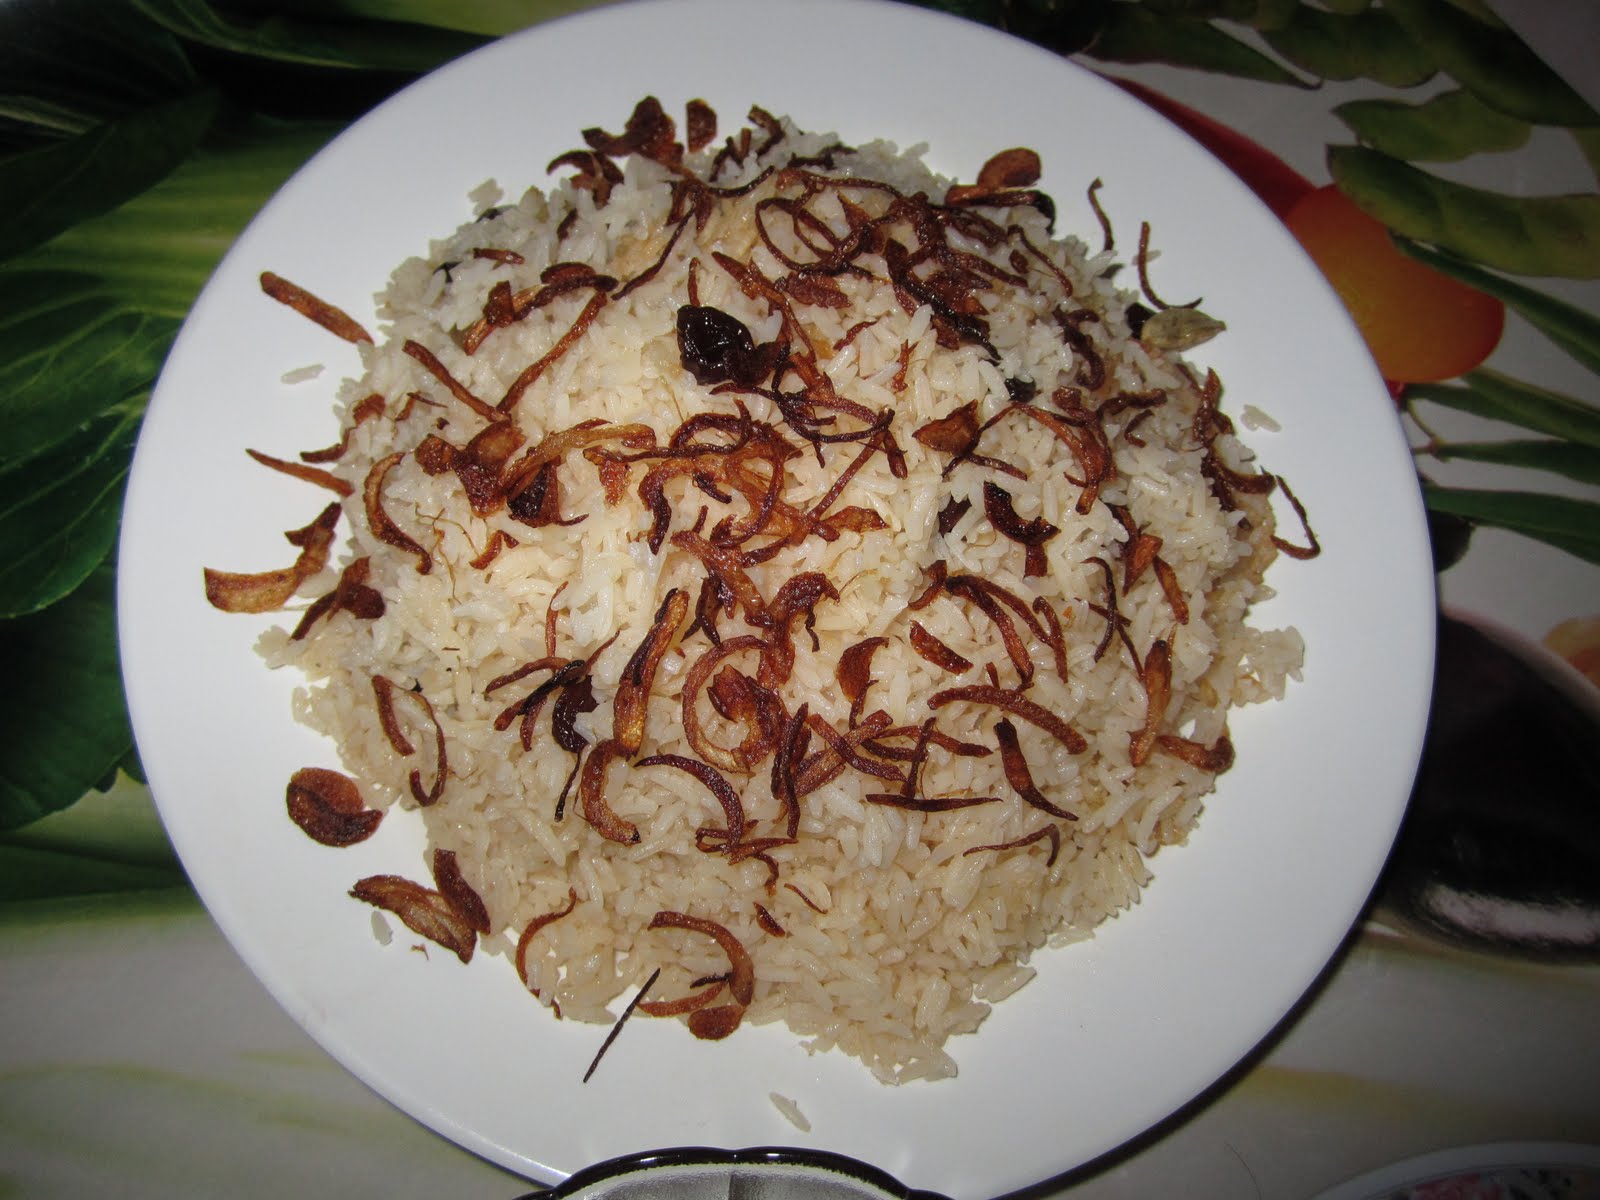 ~~Sina's Sweetsour Home~~: Hidangan Nasi Minyak Terengganu